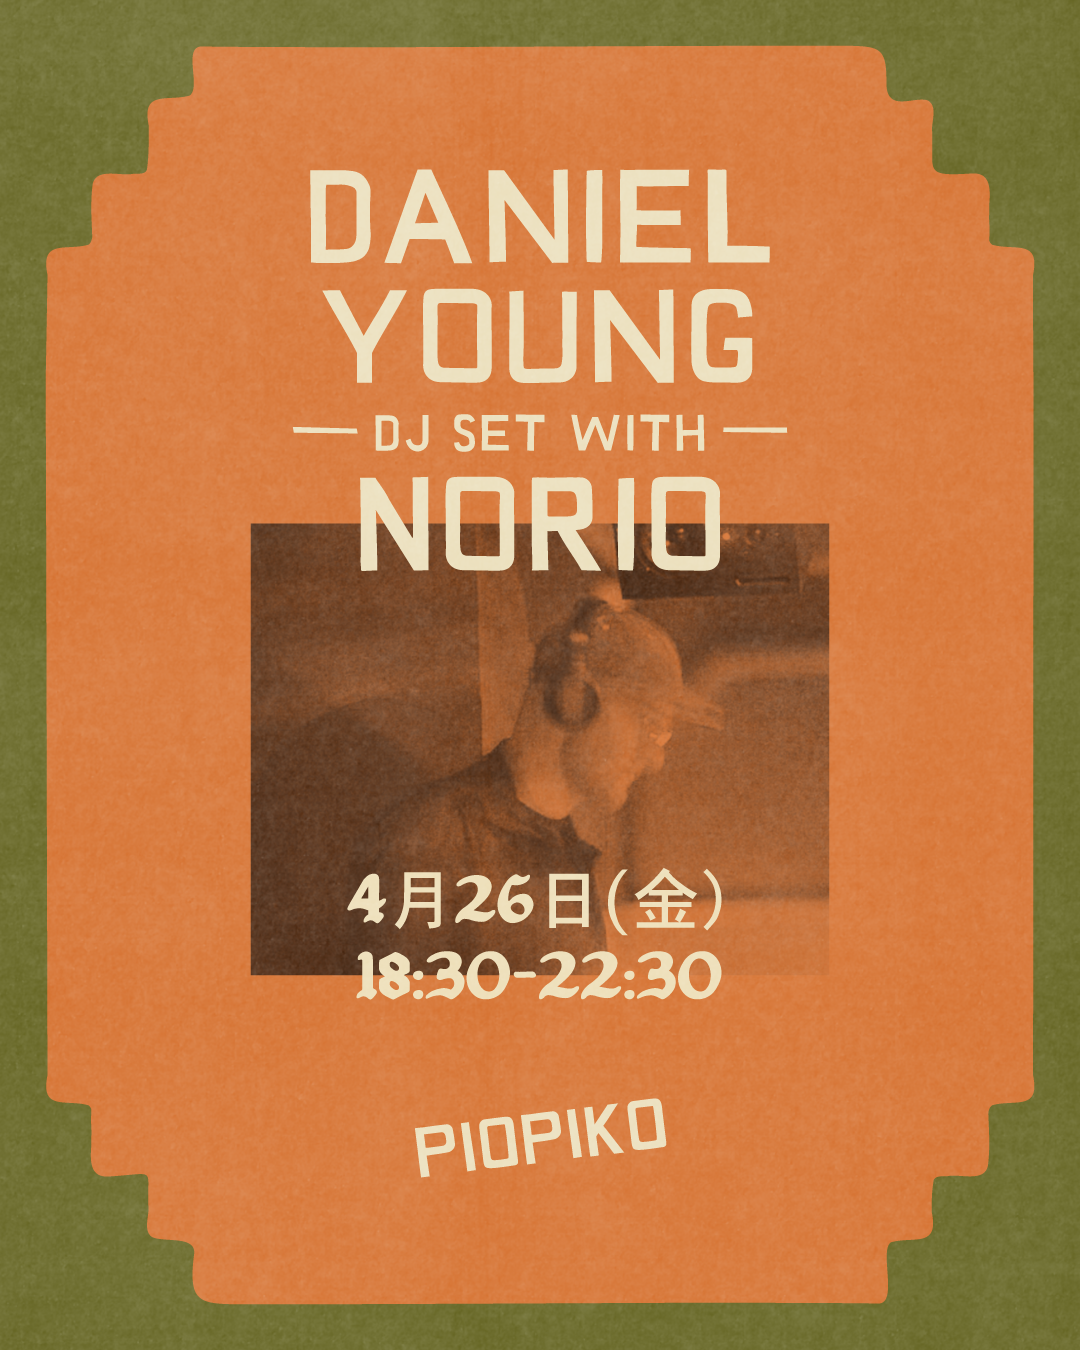 DJ Daniel Young and DJ Norio